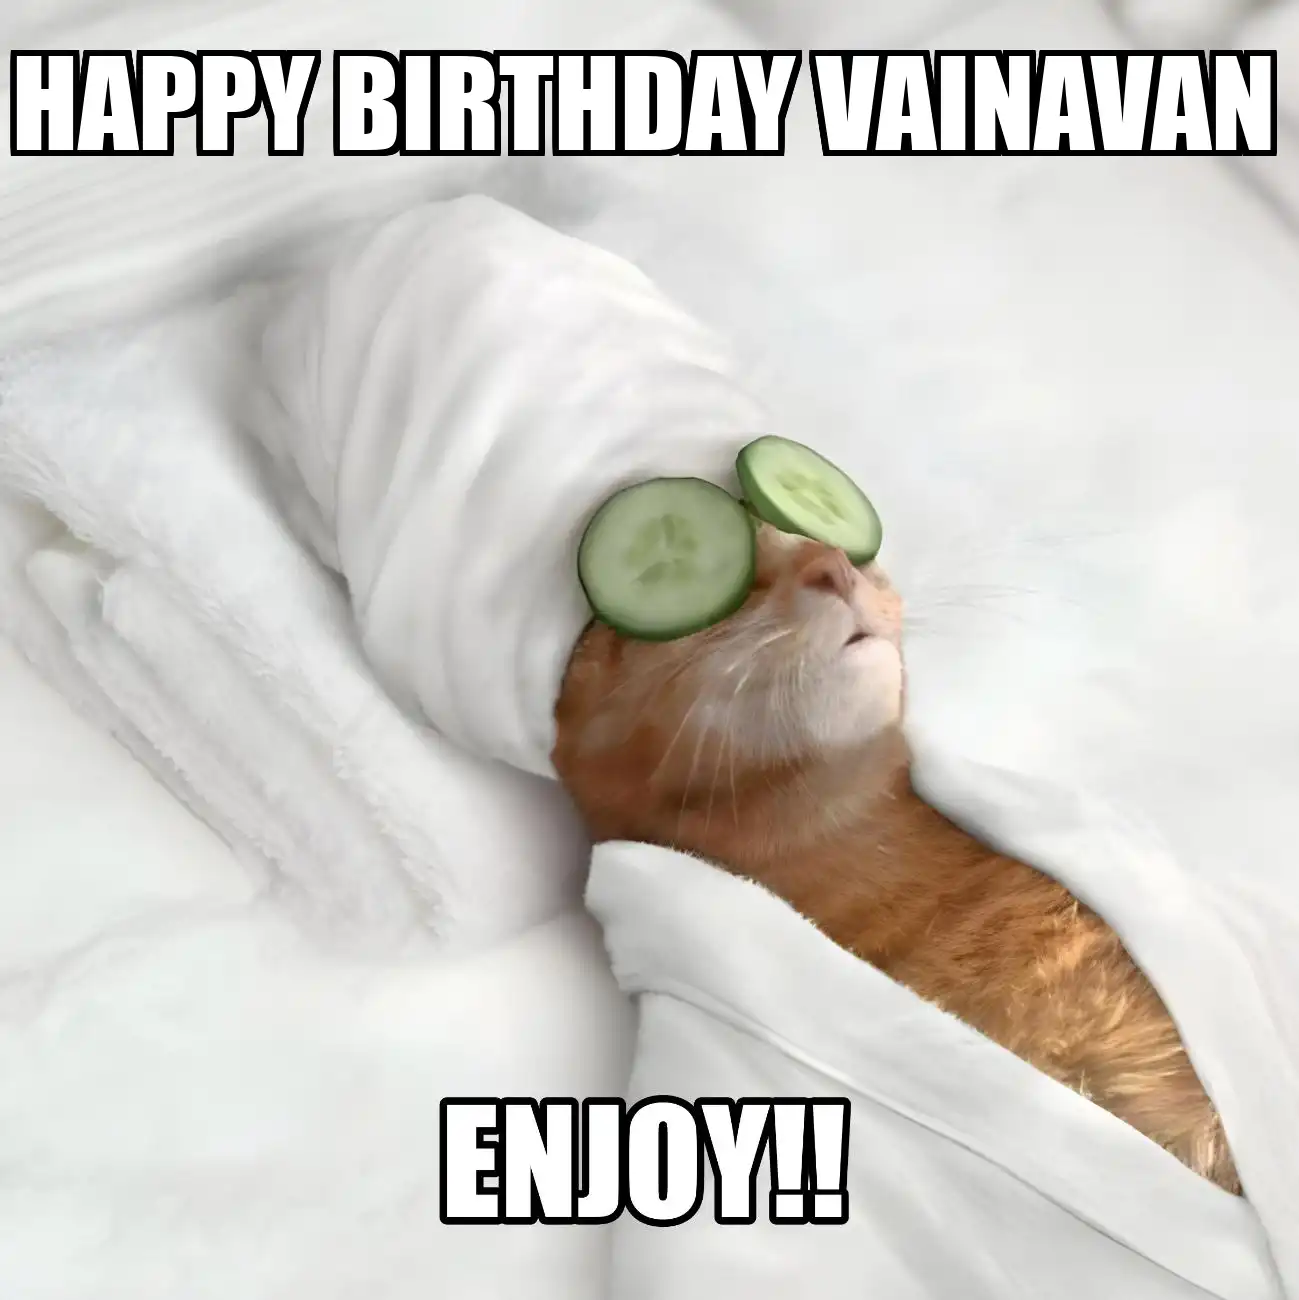 Happy Birthday Vainavan Enjoy Cat Meme